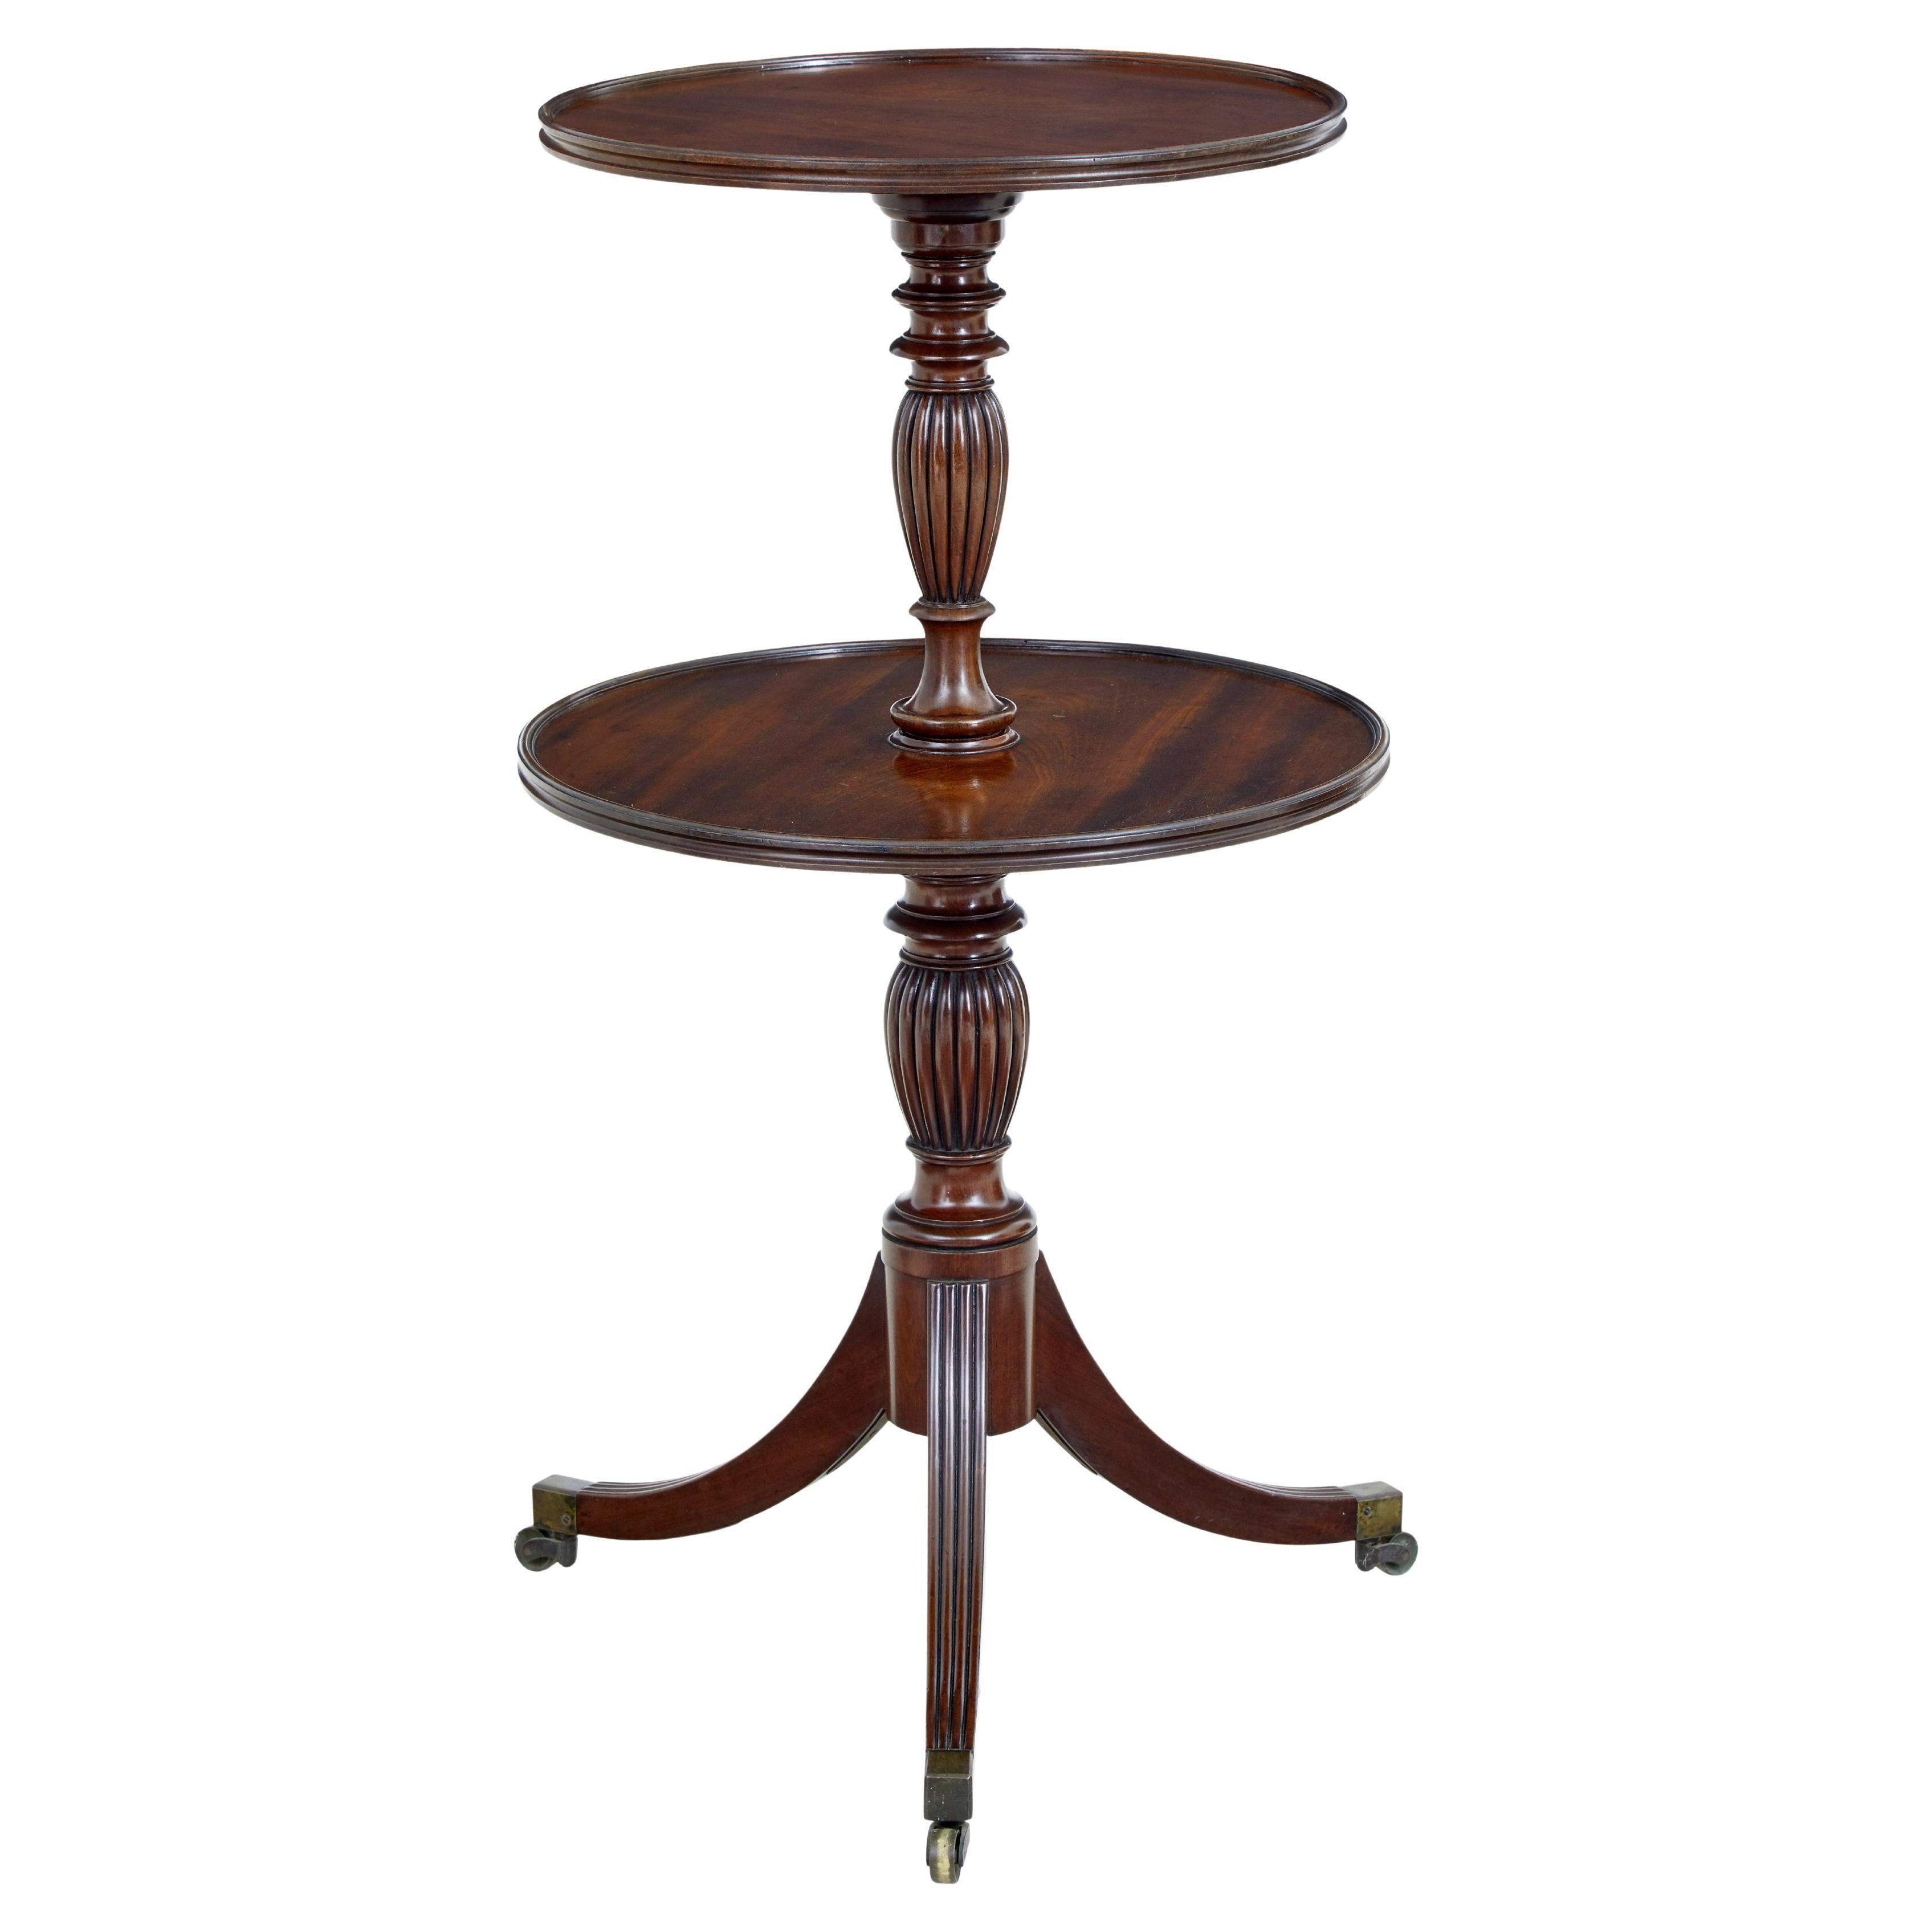 19th century William IV mahogany 2 tier circular serving table